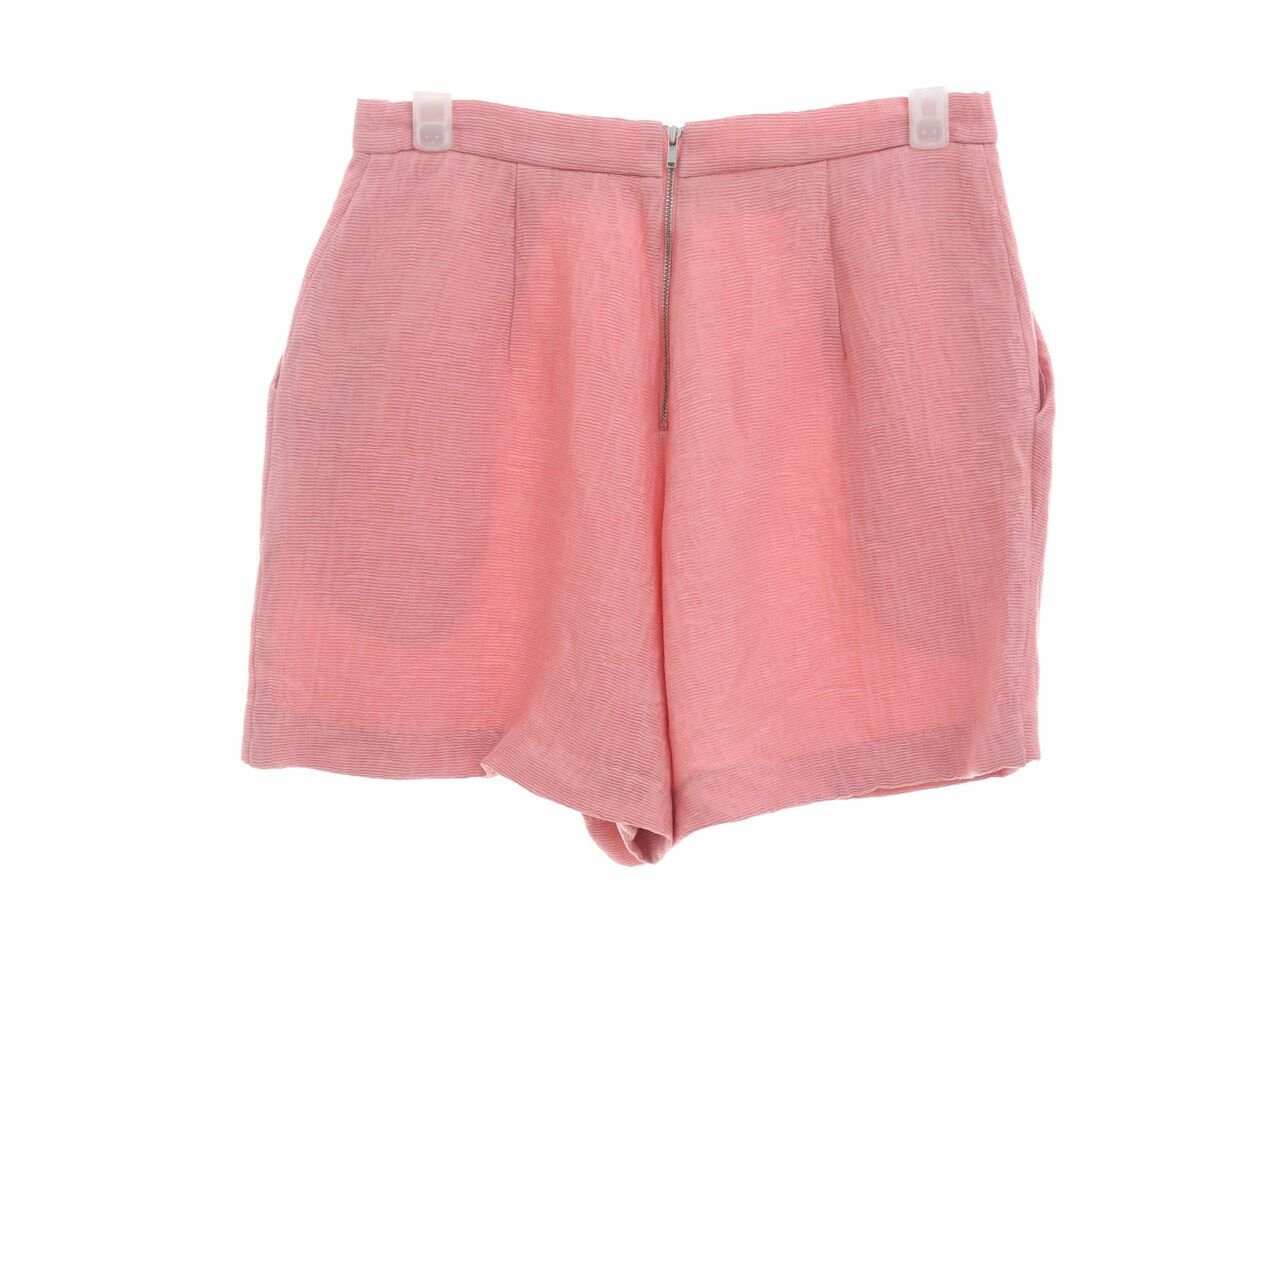 Sportsgirl Pink Shorts Pants